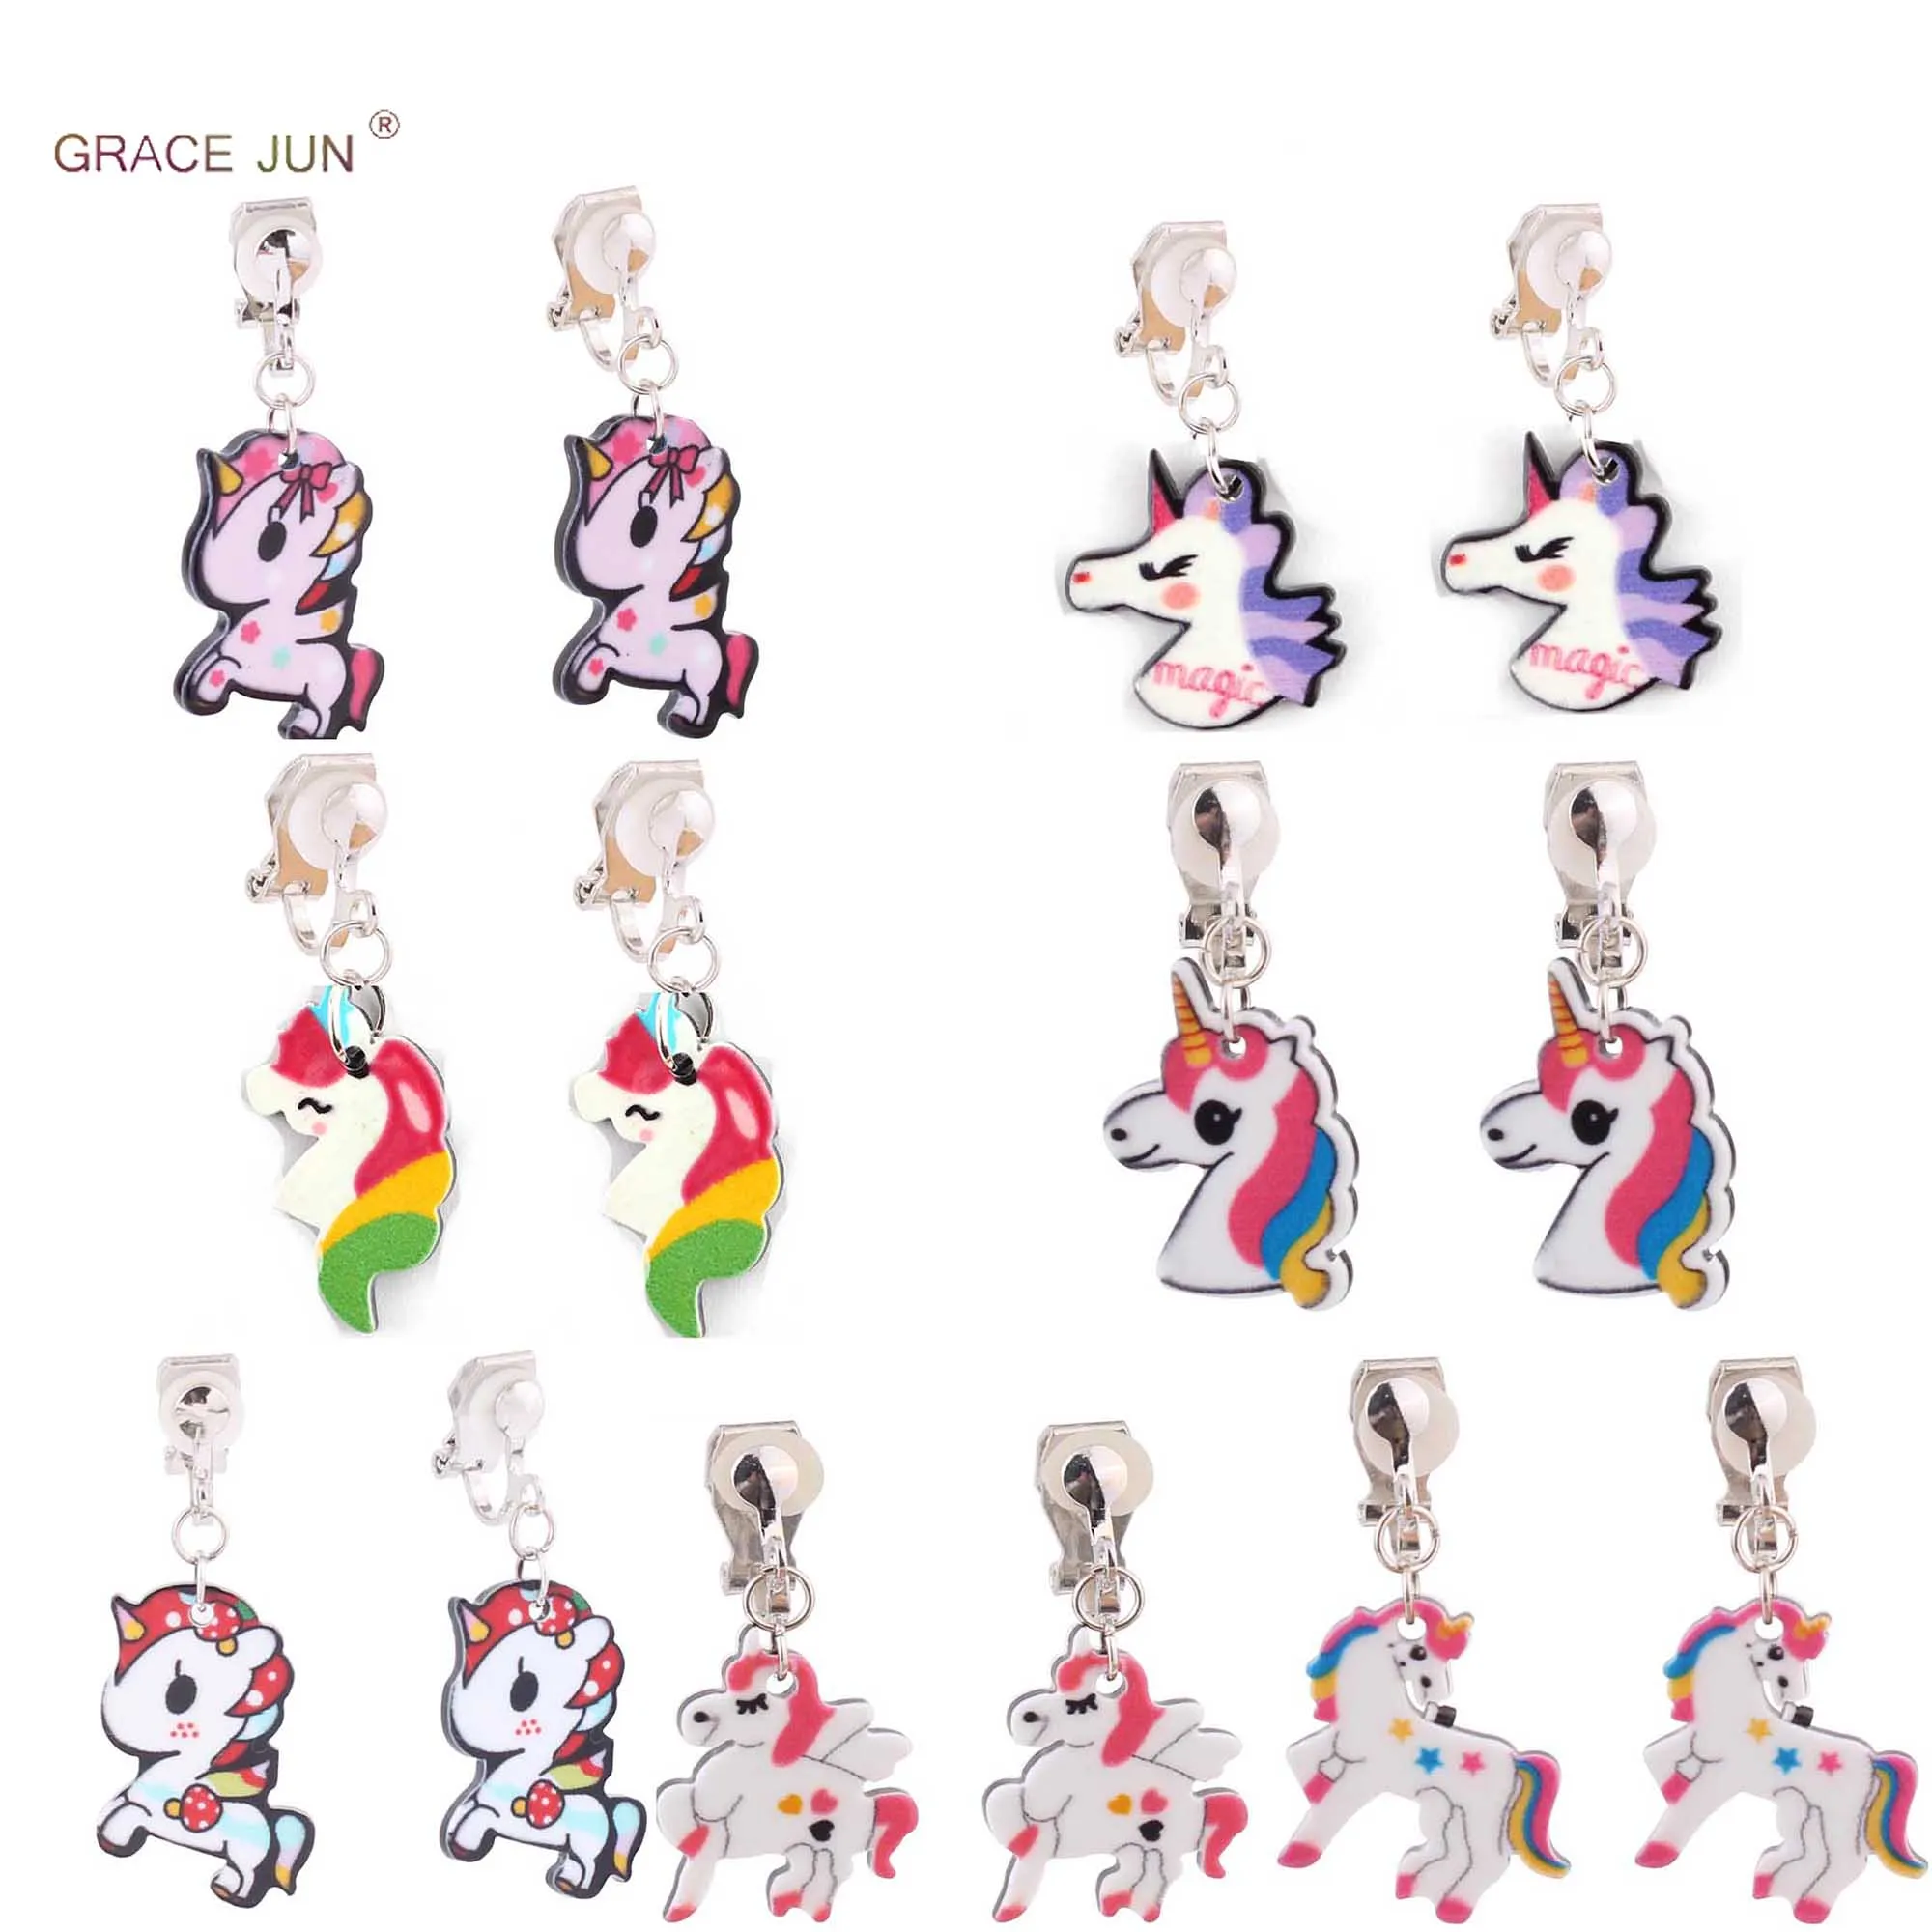 

GRACE JUN Small Horse Unicorn Clip on Earrings Without Pierced for Little Girls Toddlers Cute Fashion Ear Cuff Earrings New 2020